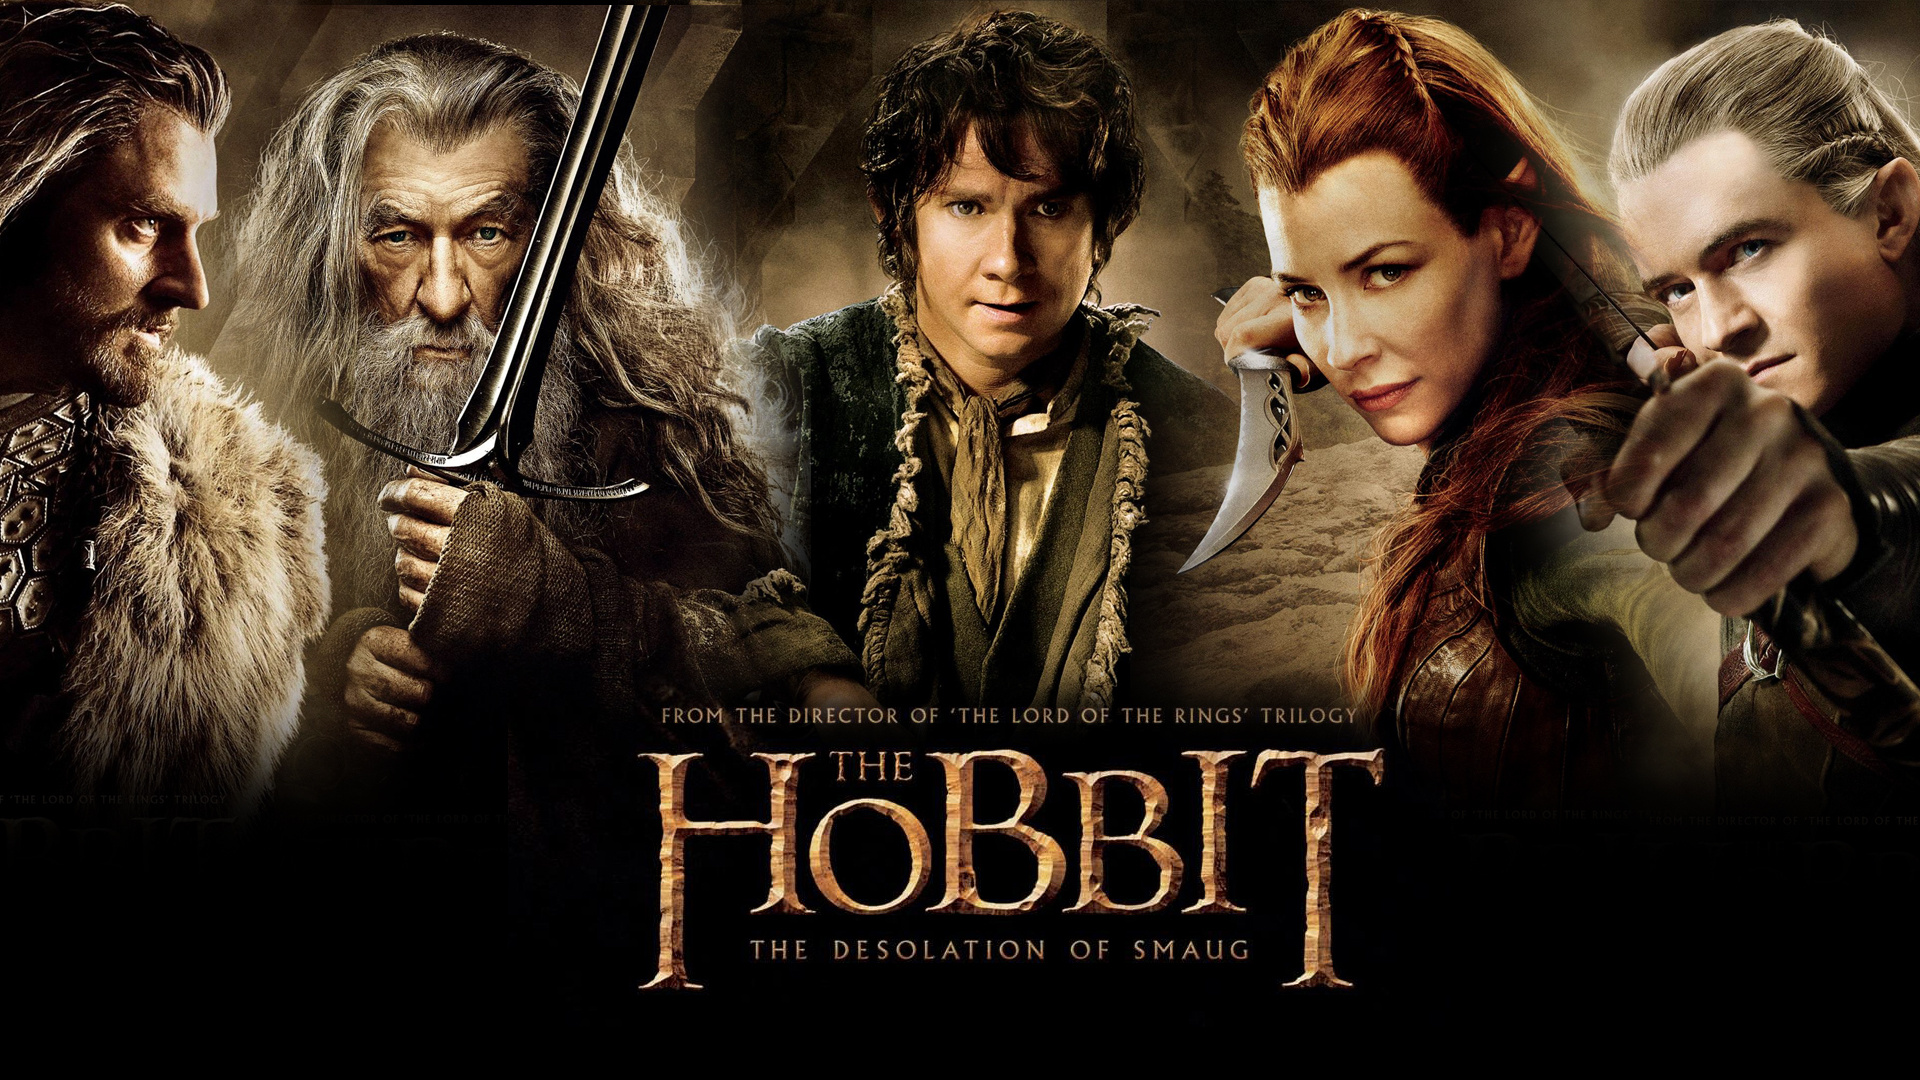 The Hobbit (Movie): Gandalf, Bilbo, Tauriel, Legolas, Tolkien characters. 1920x1080 Full HD Background.